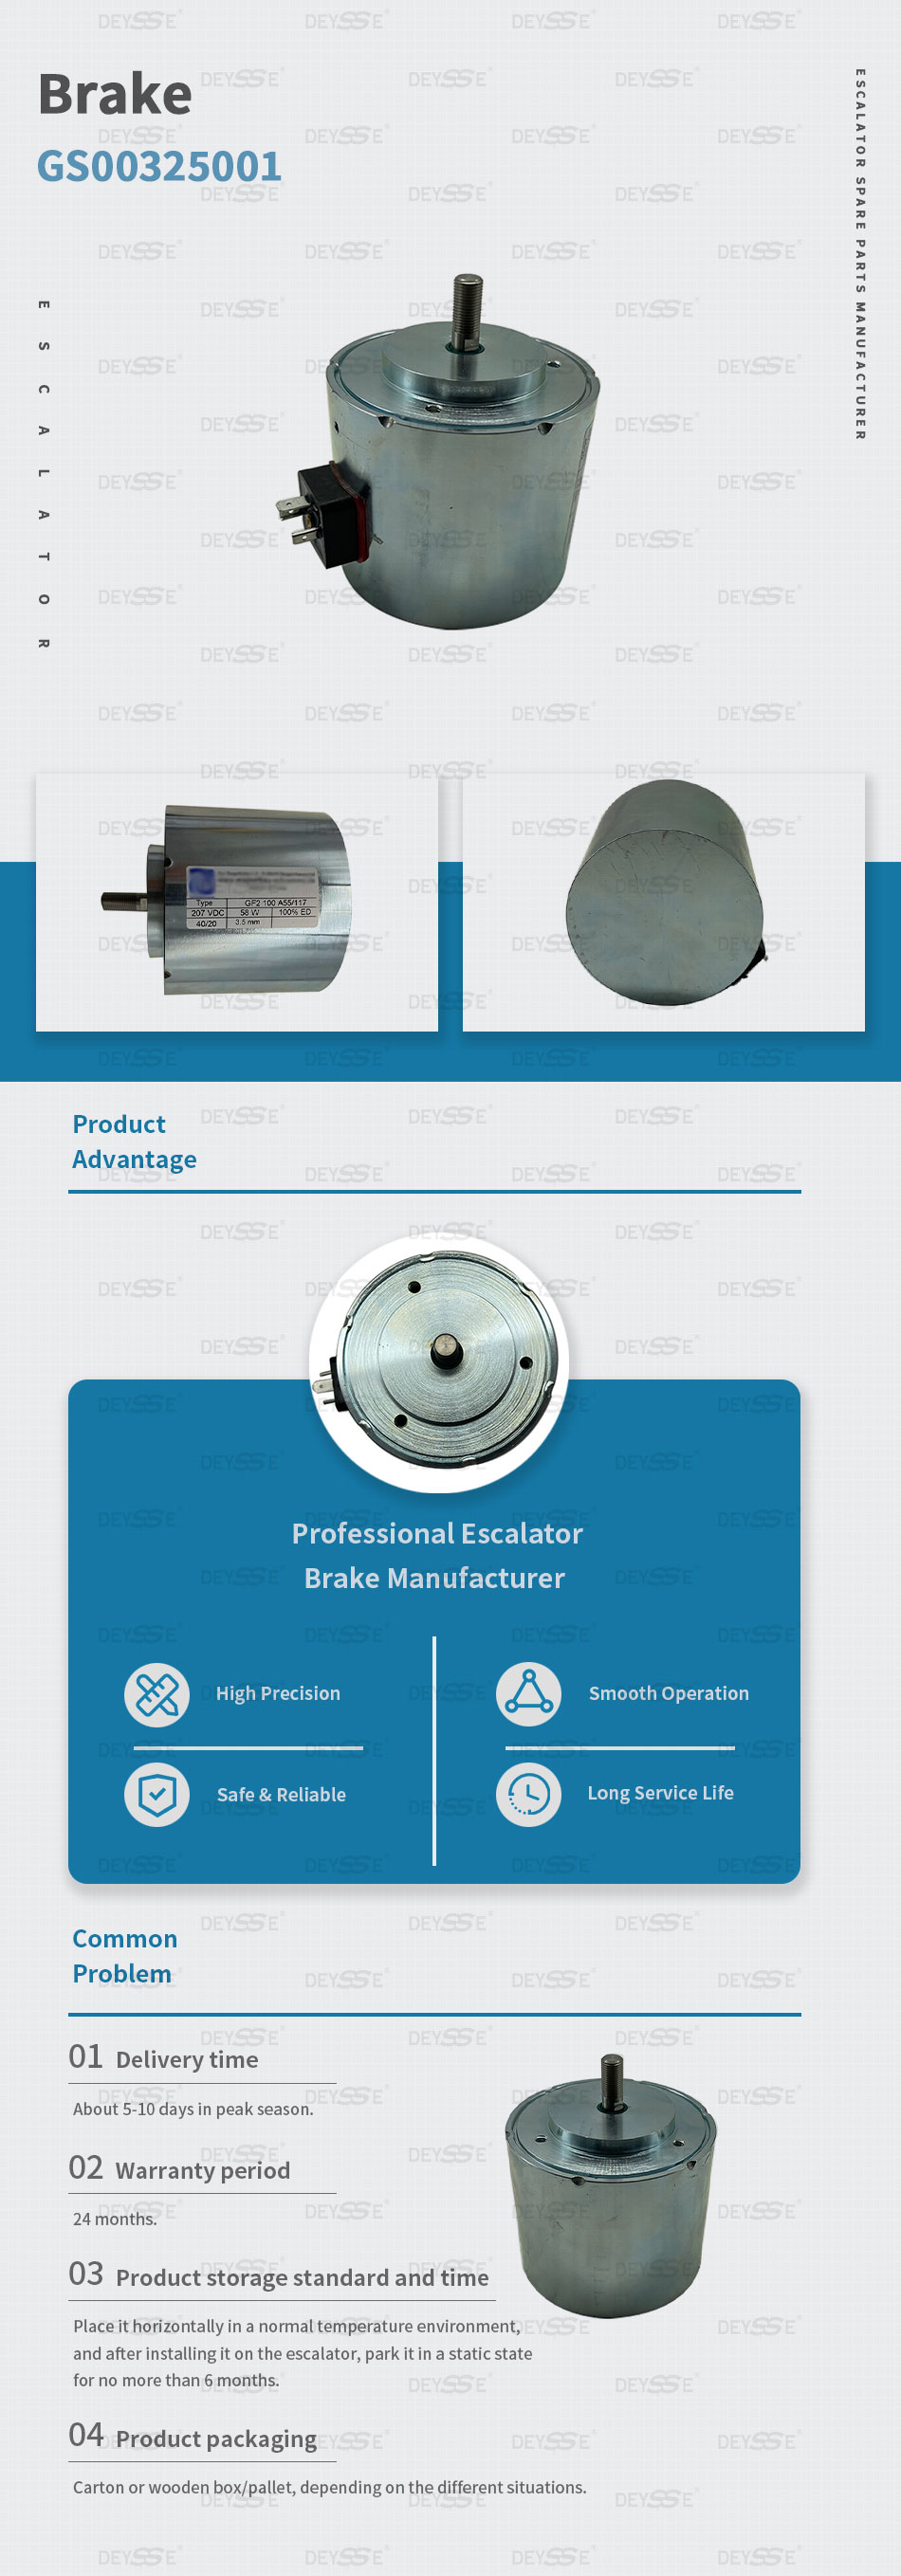 Escalator Produce GF2 100 A55/117 Brake Magnet 207V 58W 0.29A OEM KM5070940H01